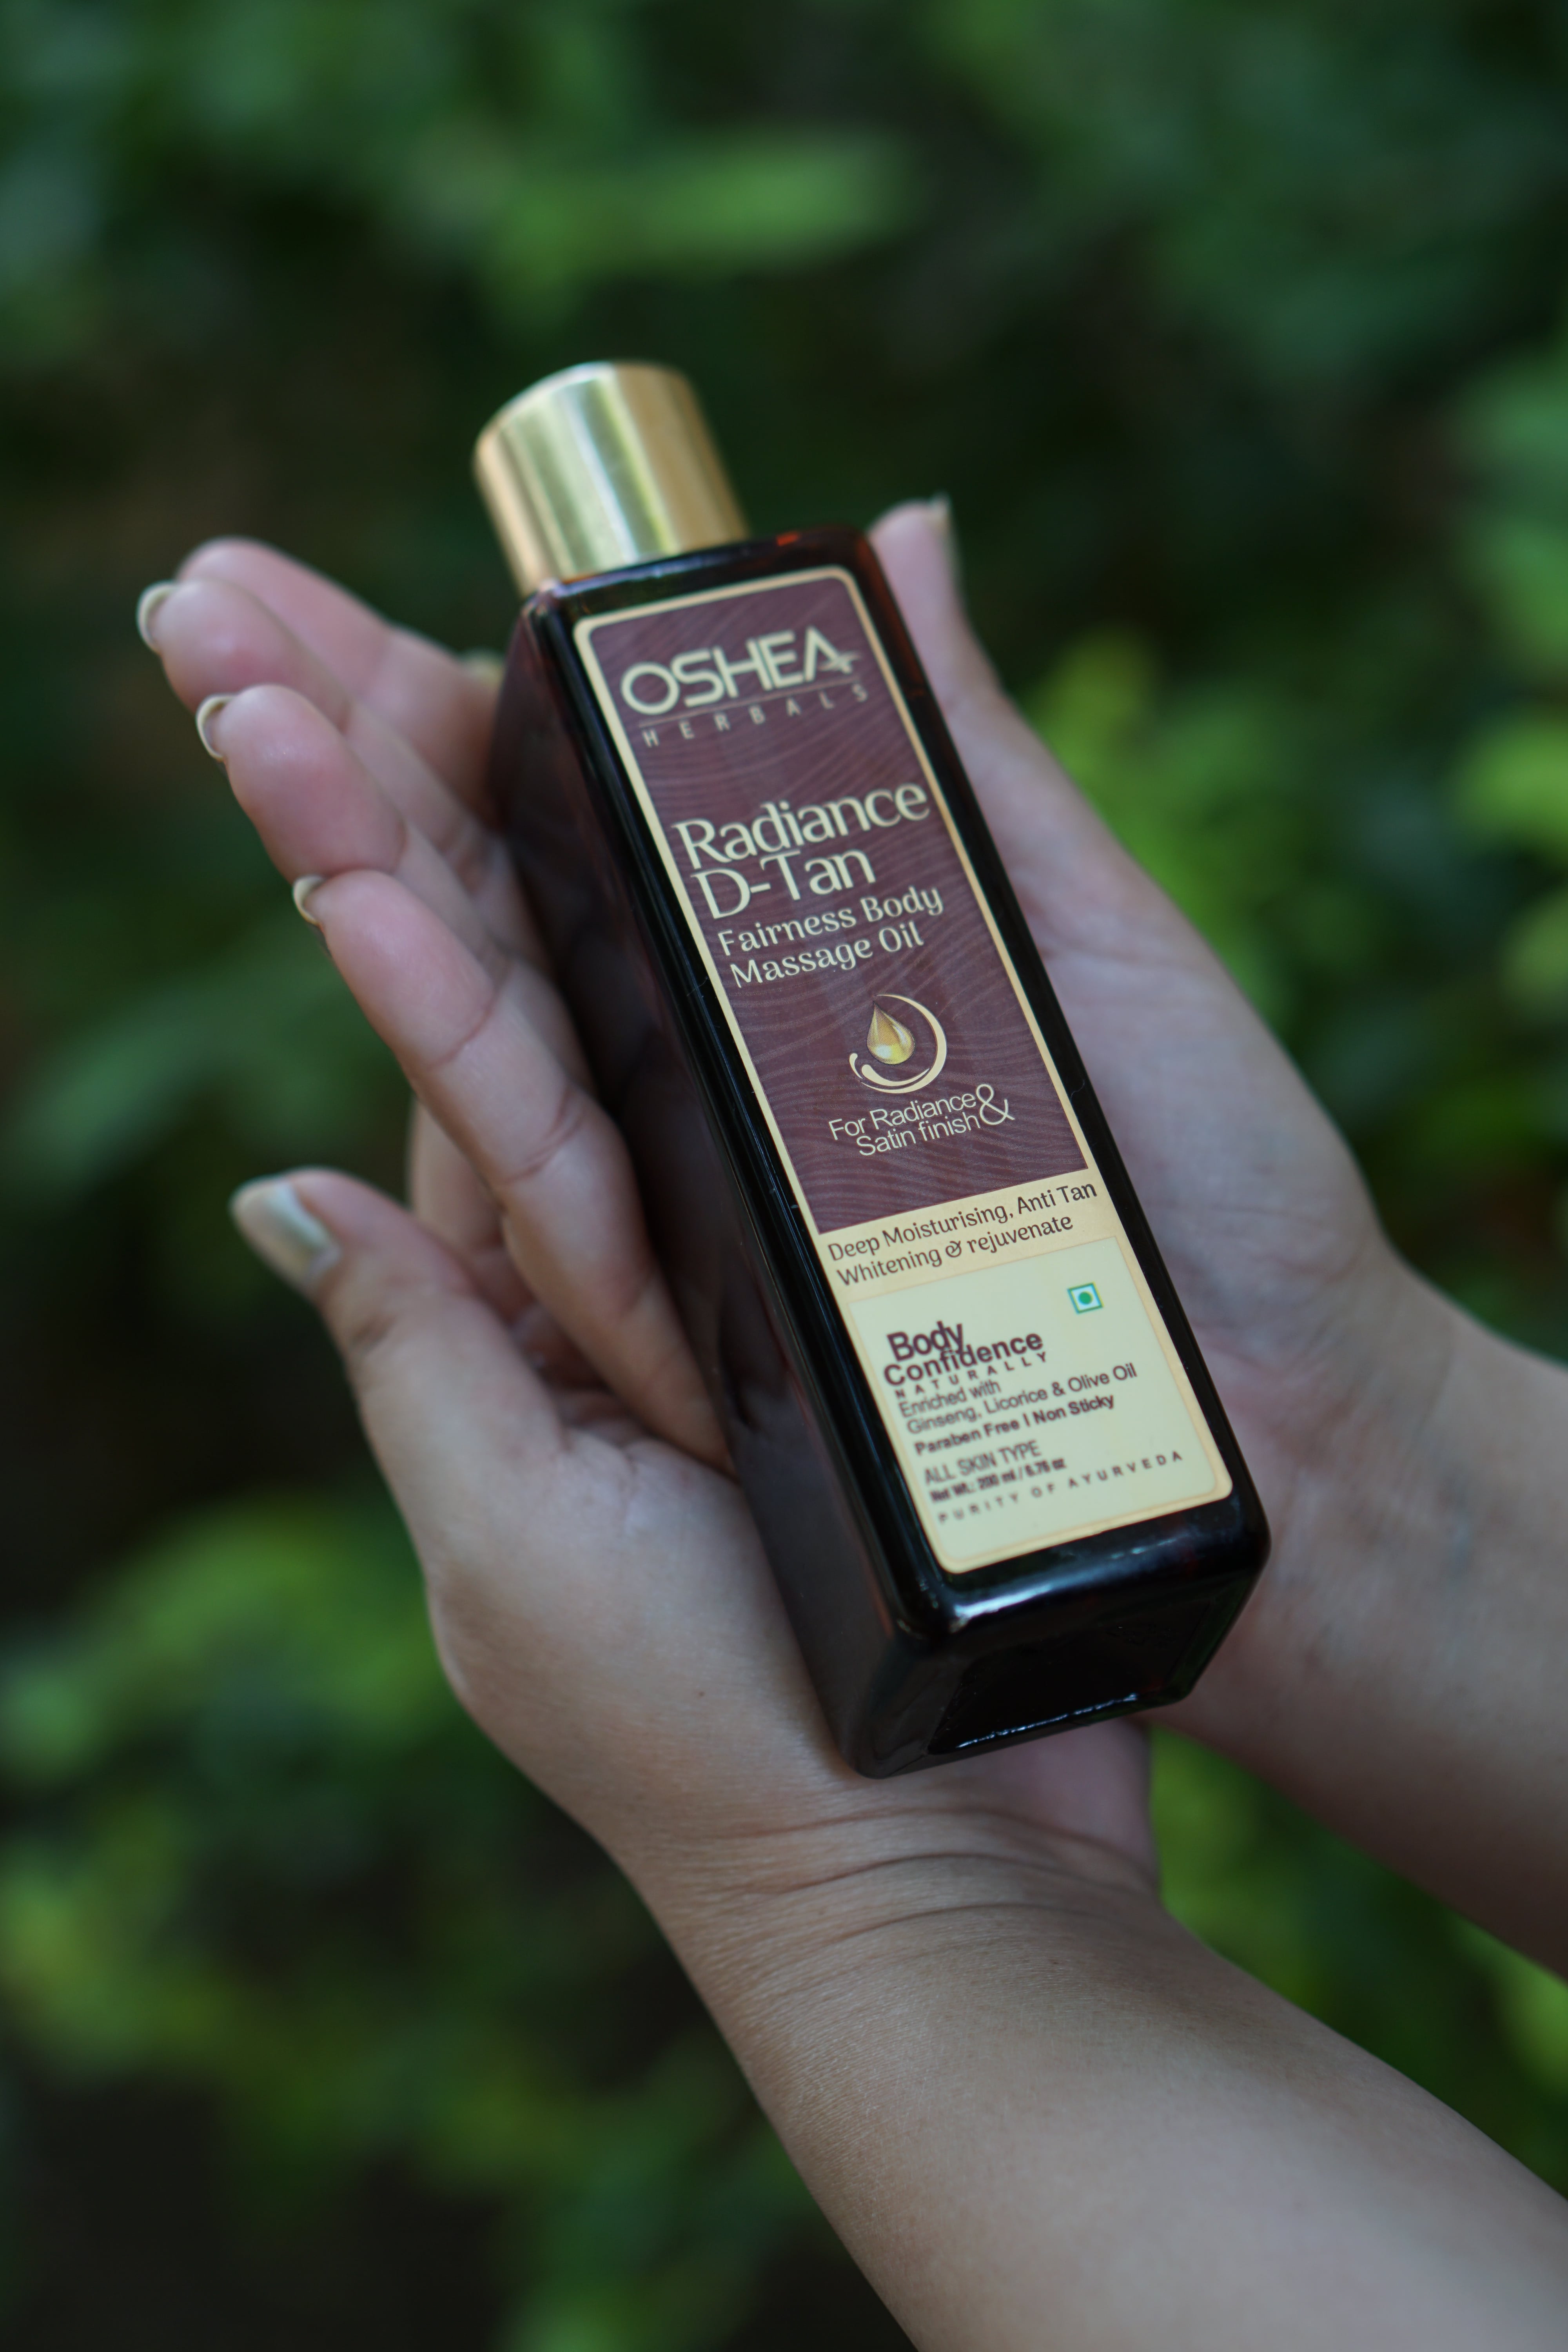 Oshea’s Radiance D-Tan Fairness Body Massage Oil Review